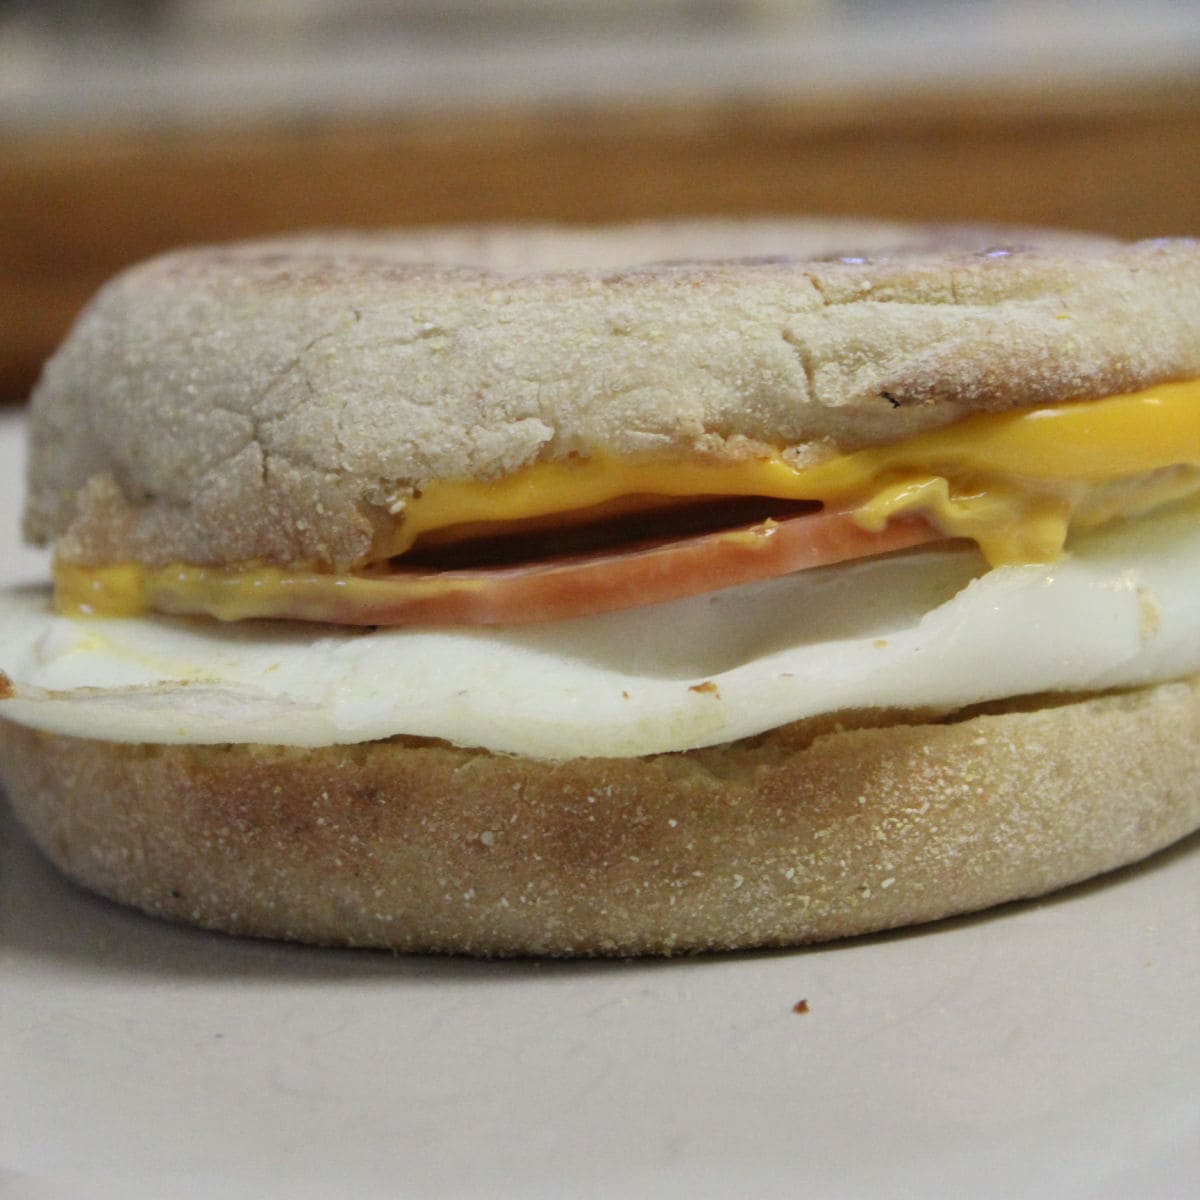 the 10-minute Healthy Hot Breakfast: Hamilton Beach Sandwich Maker